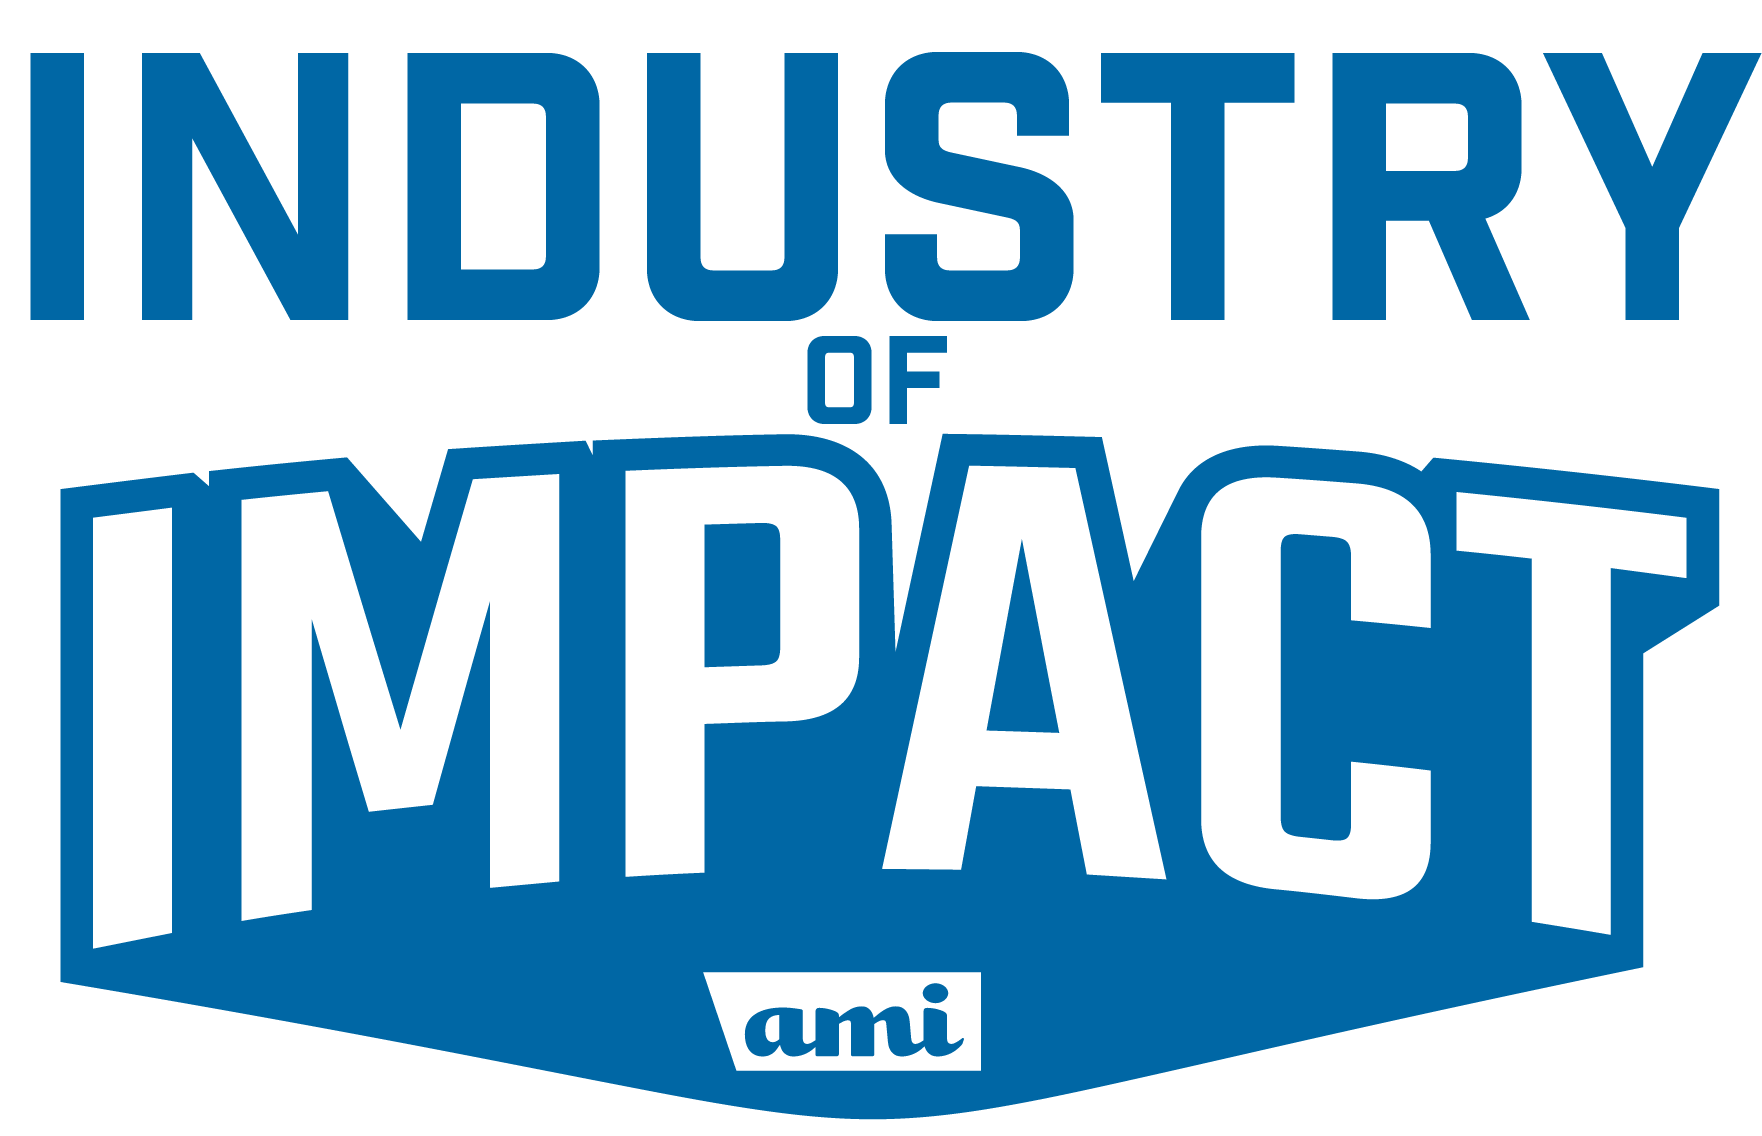 Industry of Impact on LinkedIn